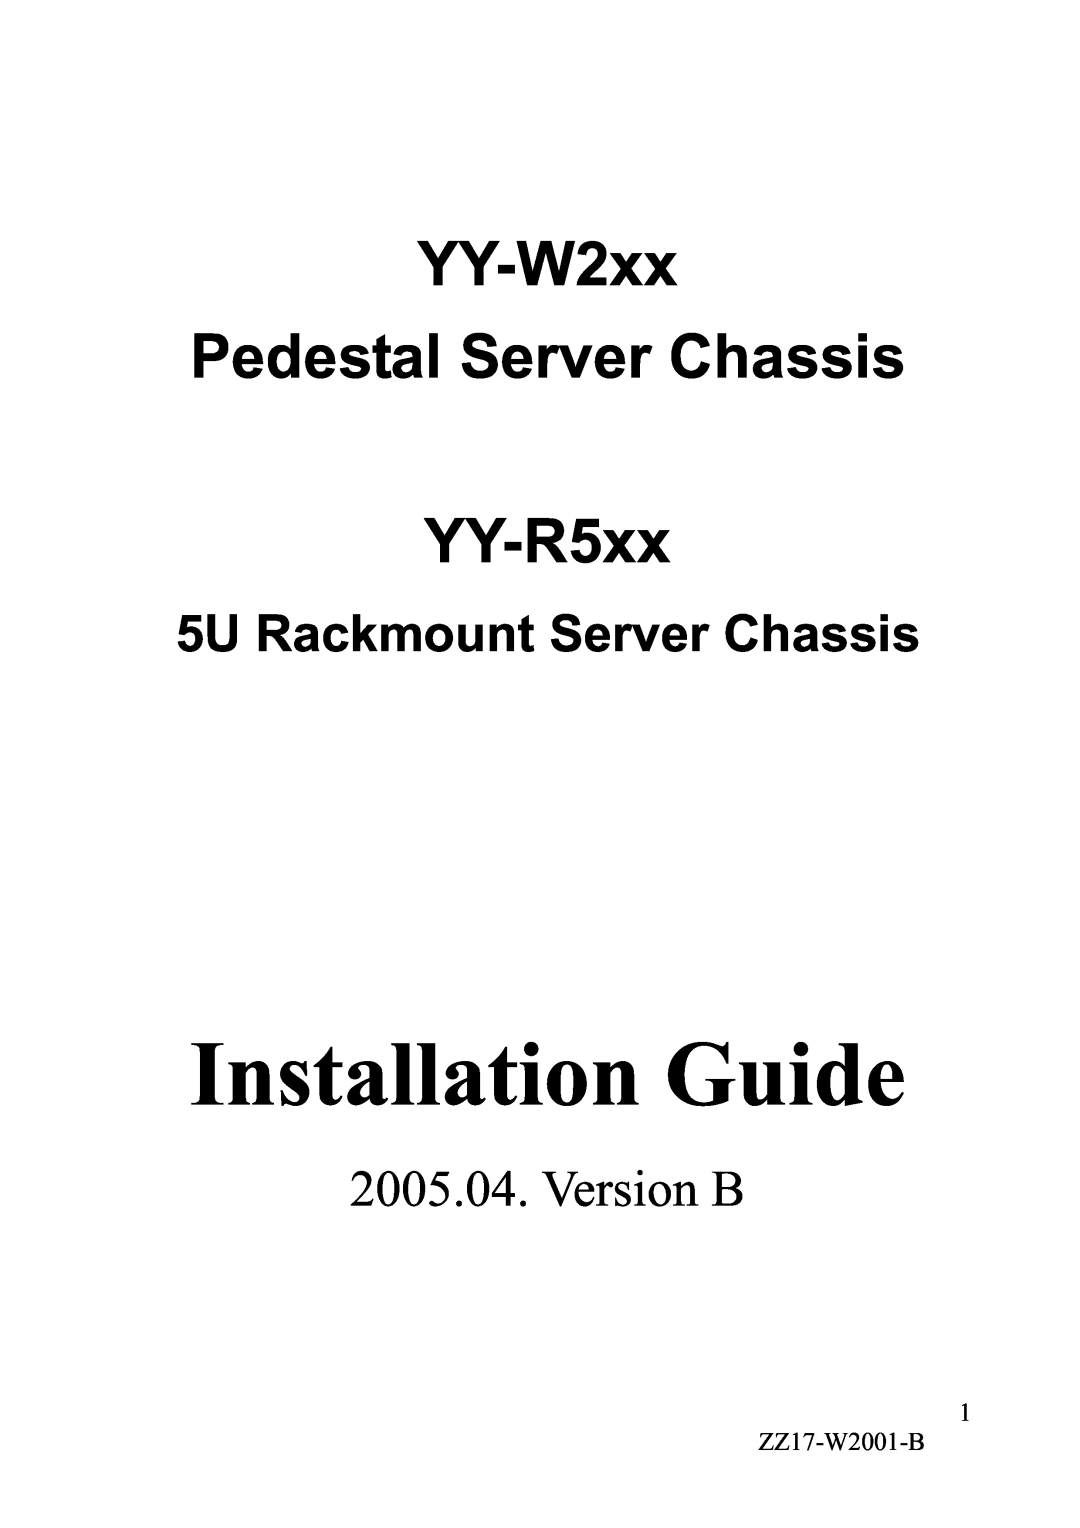 IBM manual Installation Guide, YY-W2xx Pedestal Server Chassis YY-R5xx, 5U Rackmount Server Chassis, Version B 